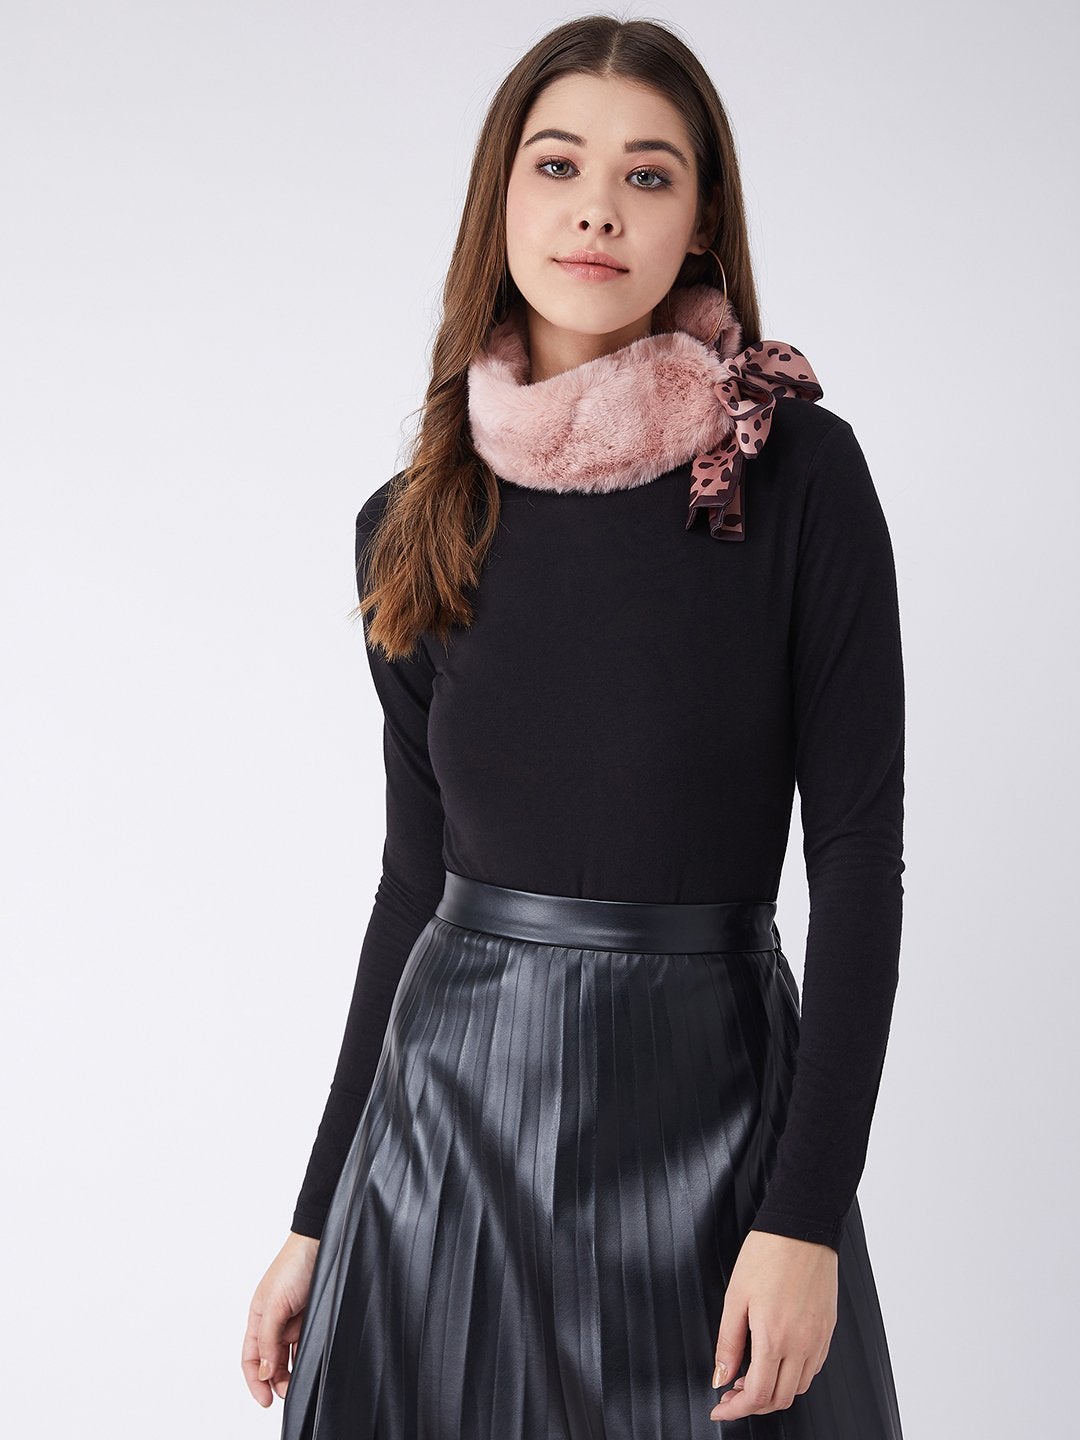 Women's Fur Neckpiece  Pink - InWeave